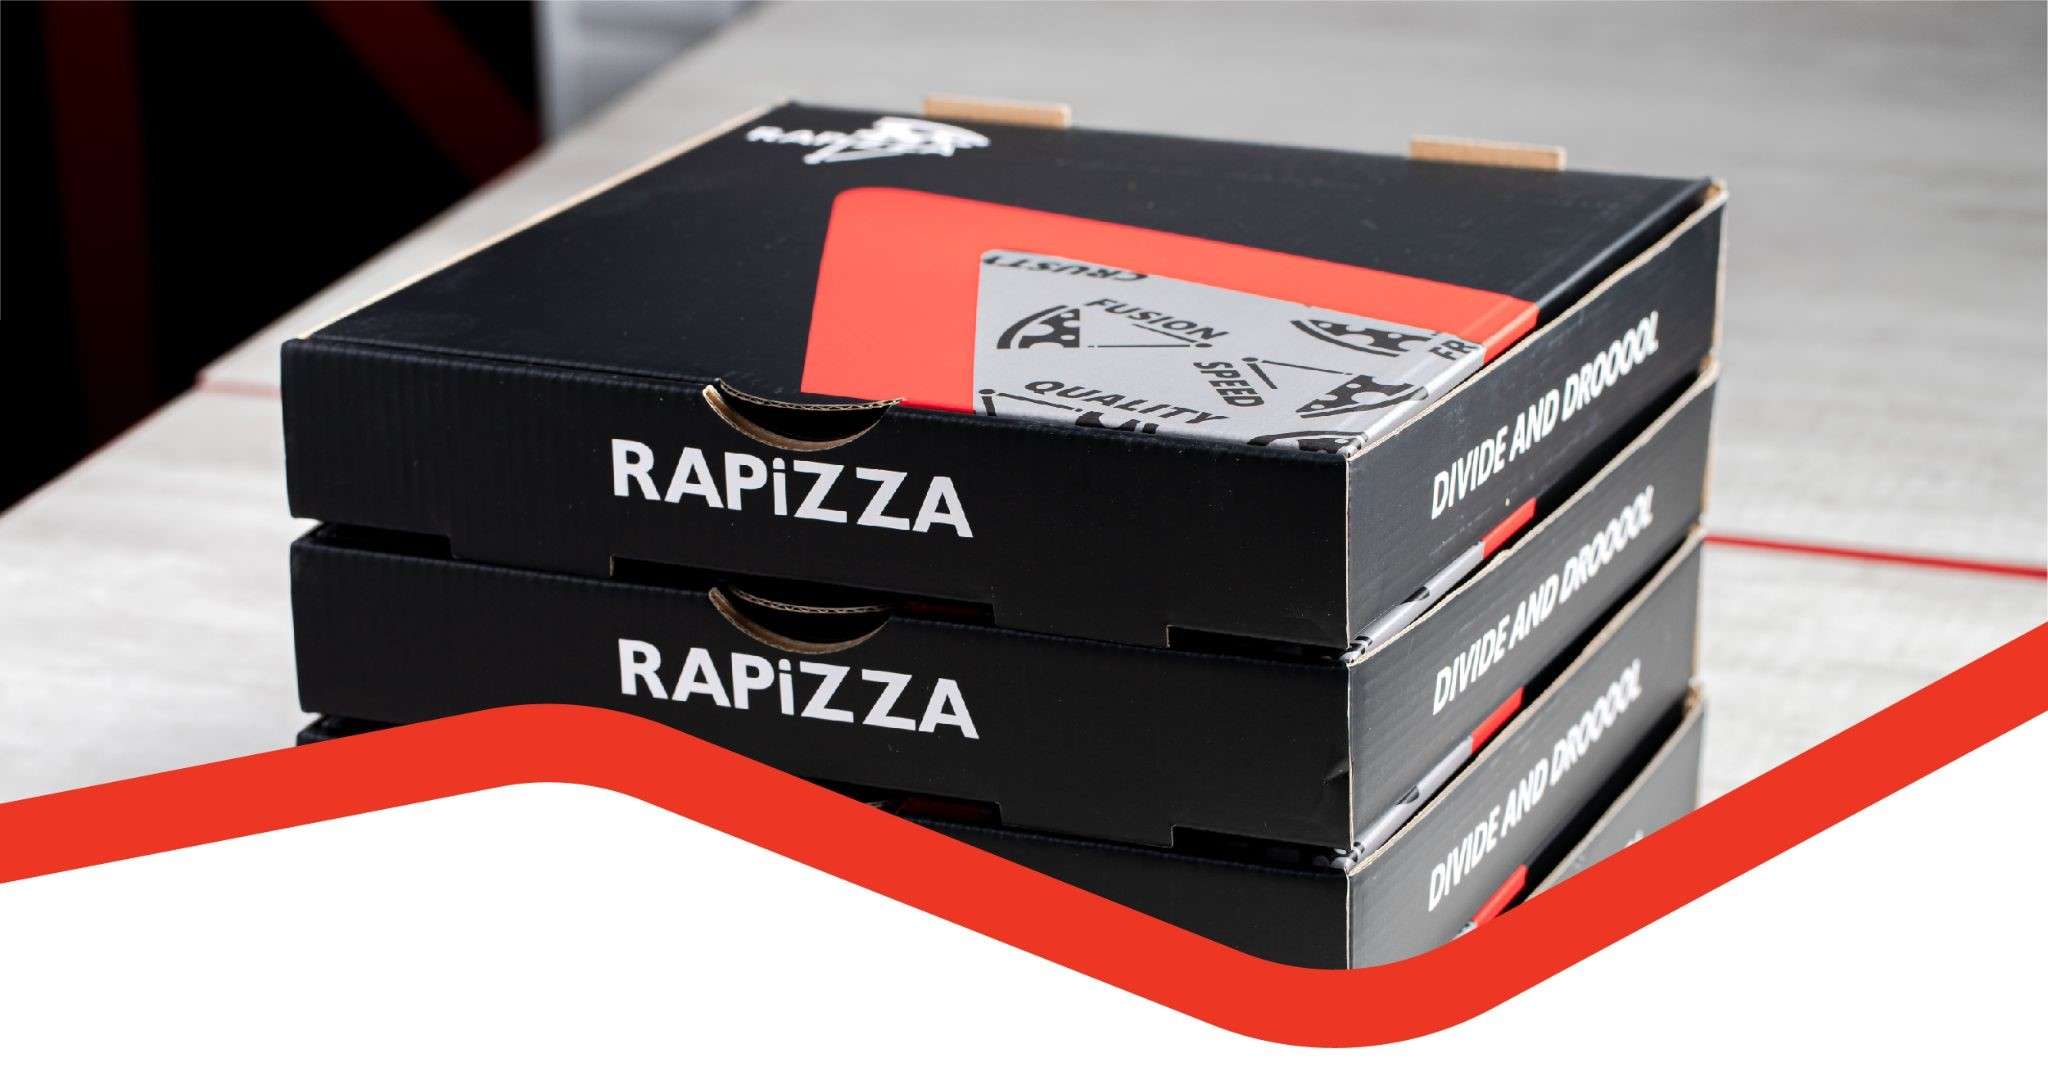 Pizza Deals in RAPiZZA Burlington Canada | Best Indian Pizza Store In Brampton